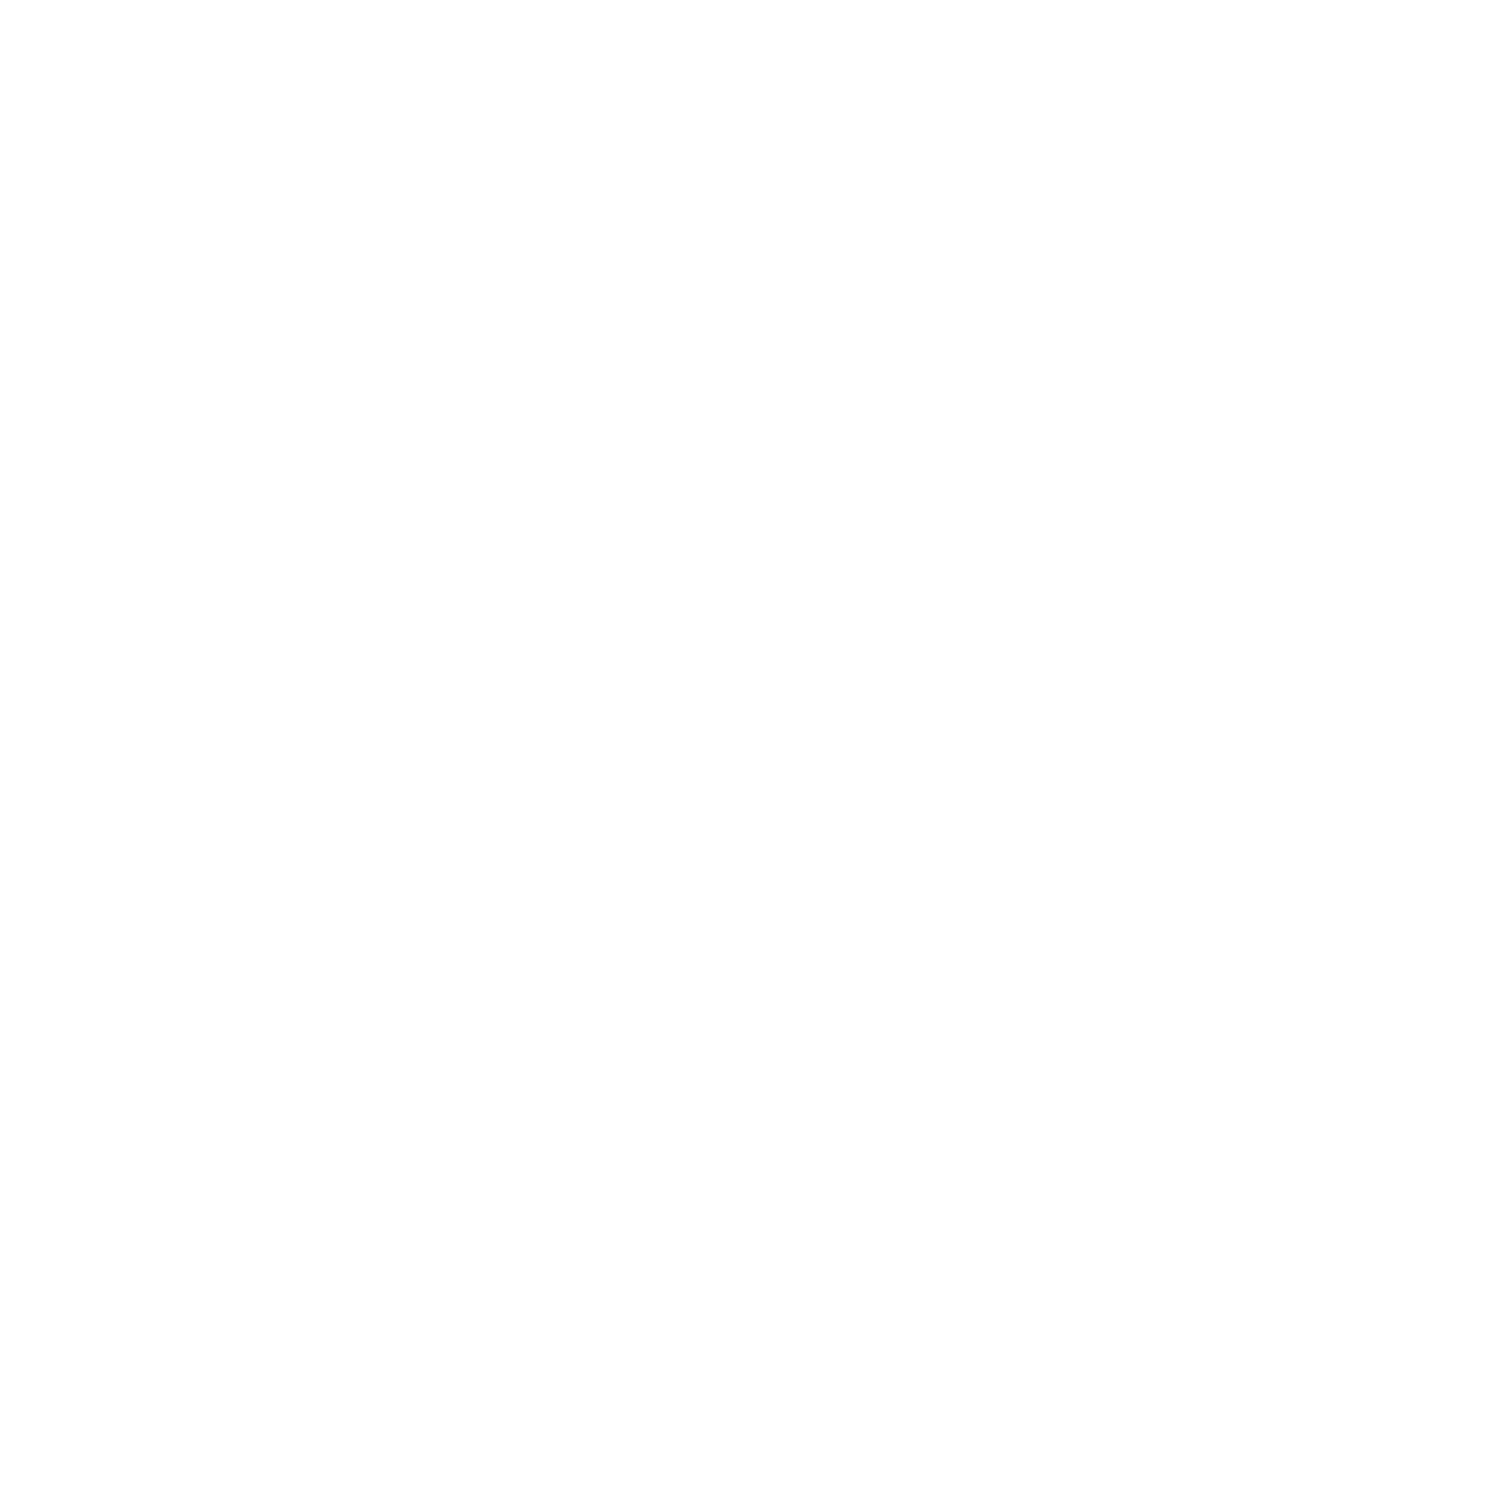 GR Design & Photography